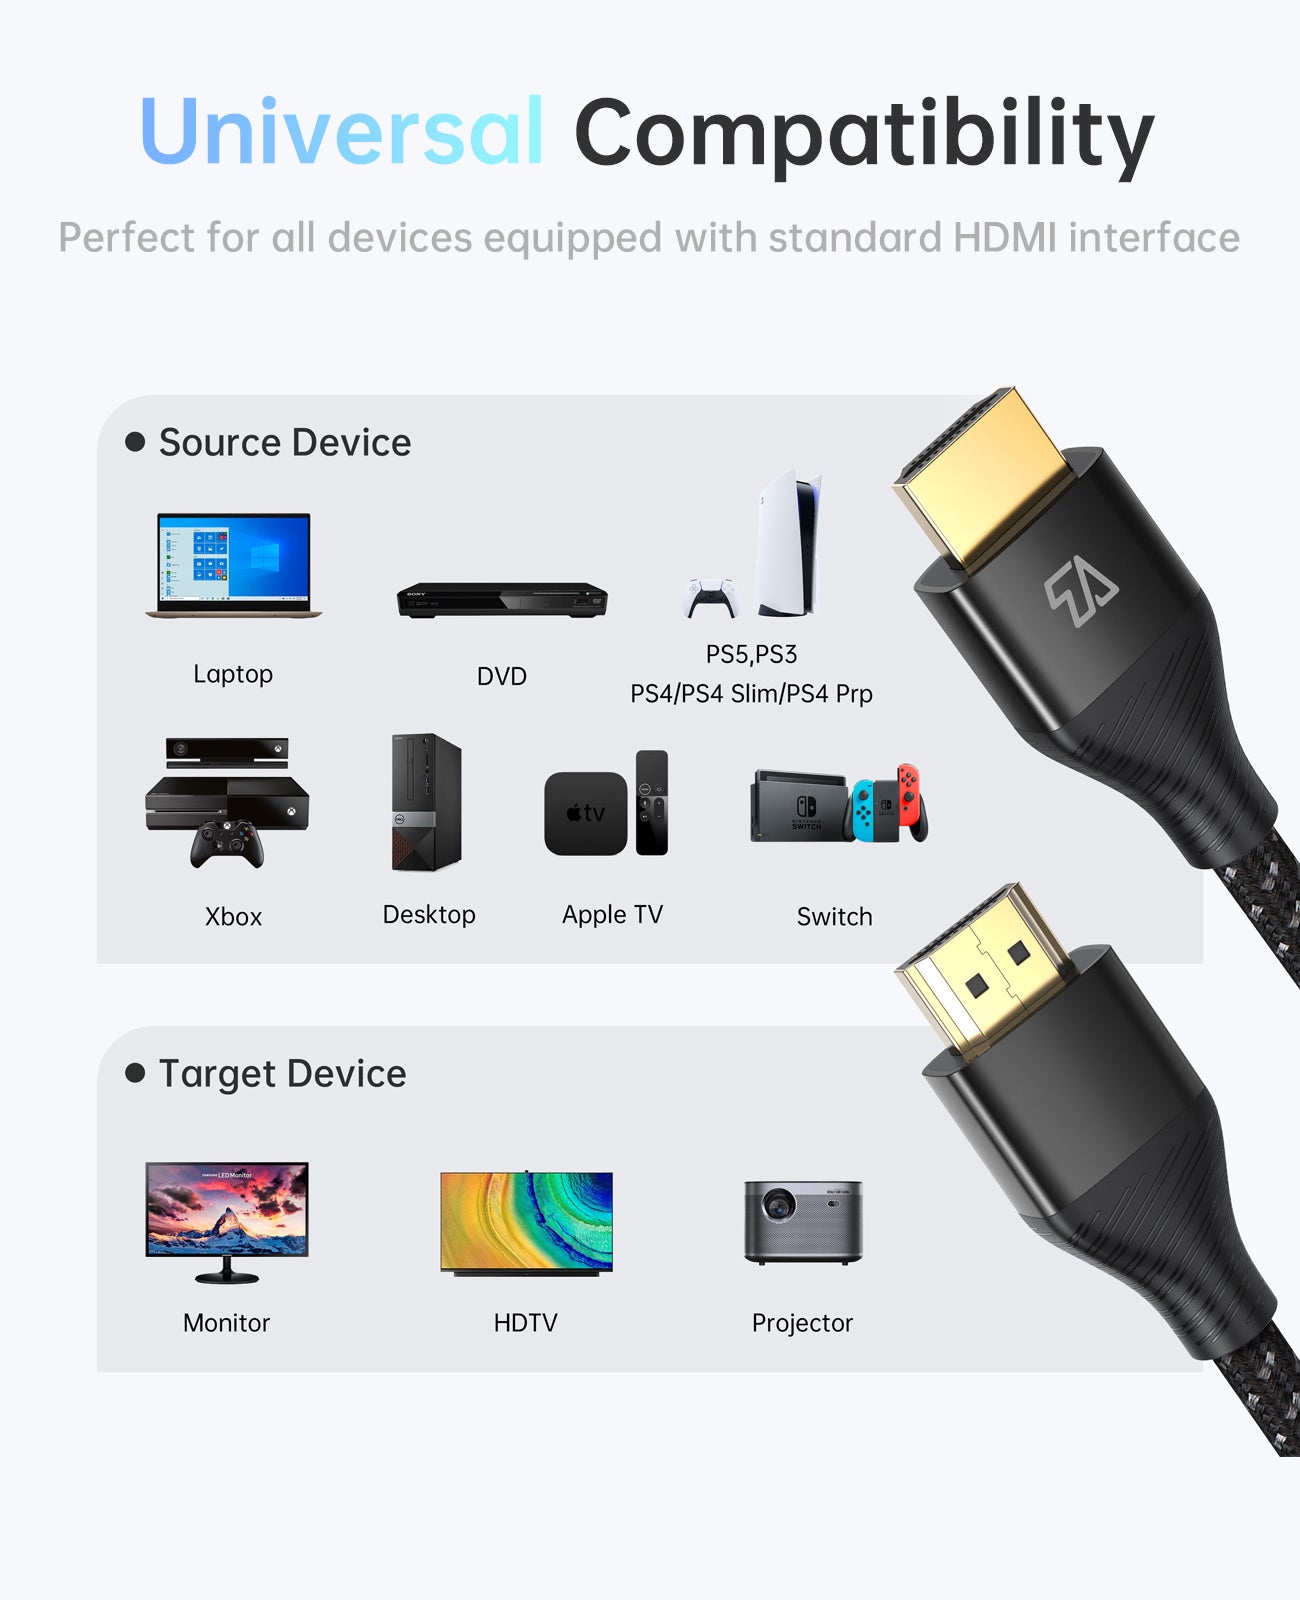 USB C to USB C Cable, 6.6FT/2M – teleadapt